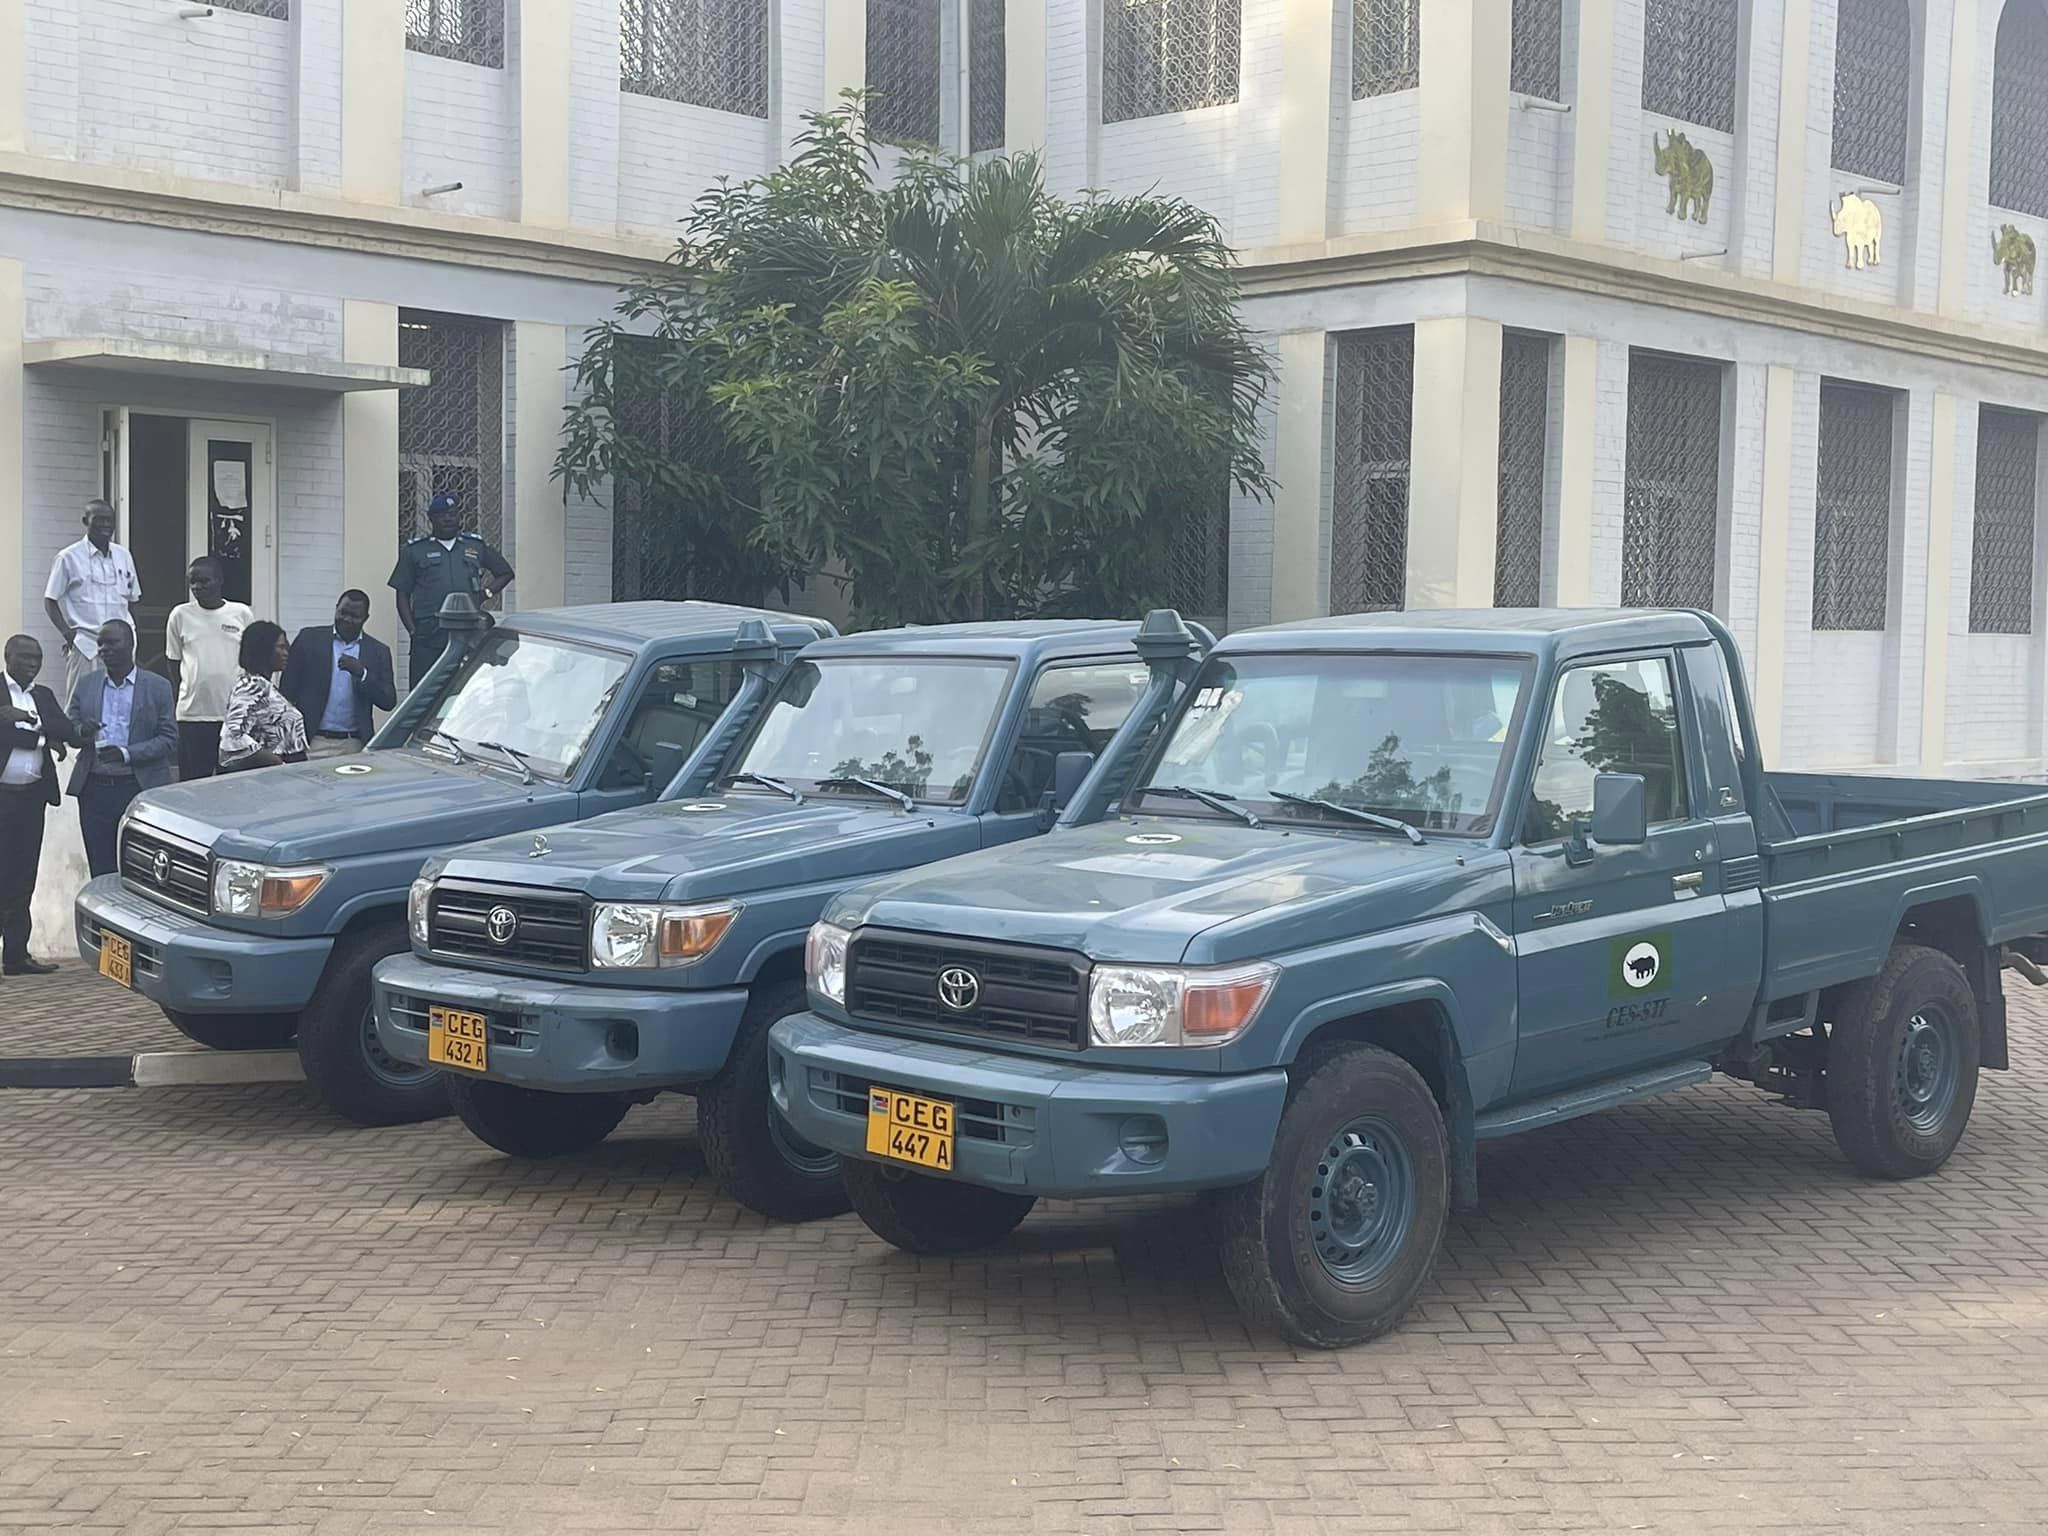 Governor Adil deploys security patrol vehicles